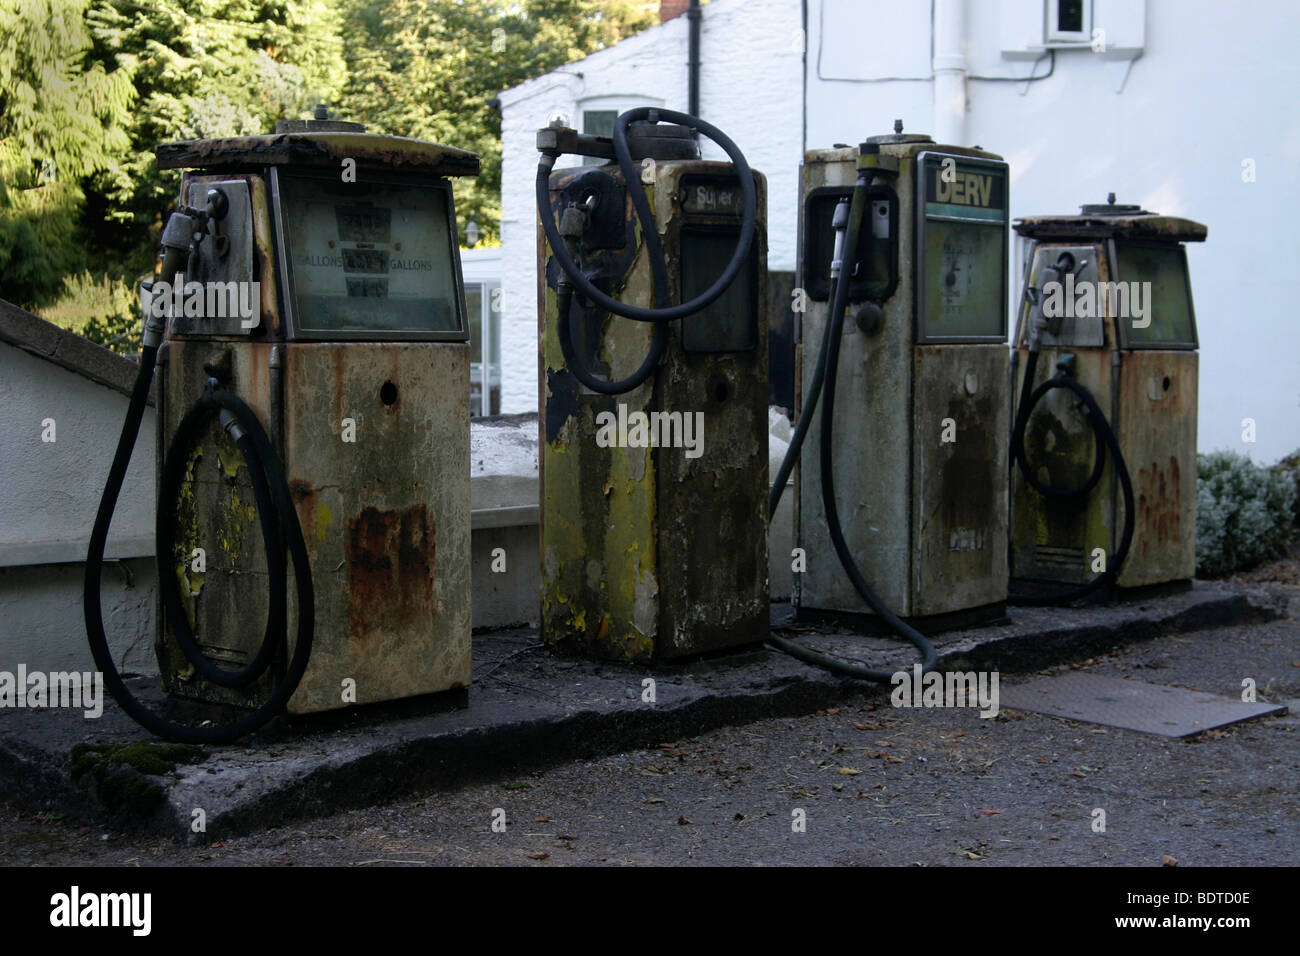 Defunct petrol pumps on garage forecourt Stock Photo